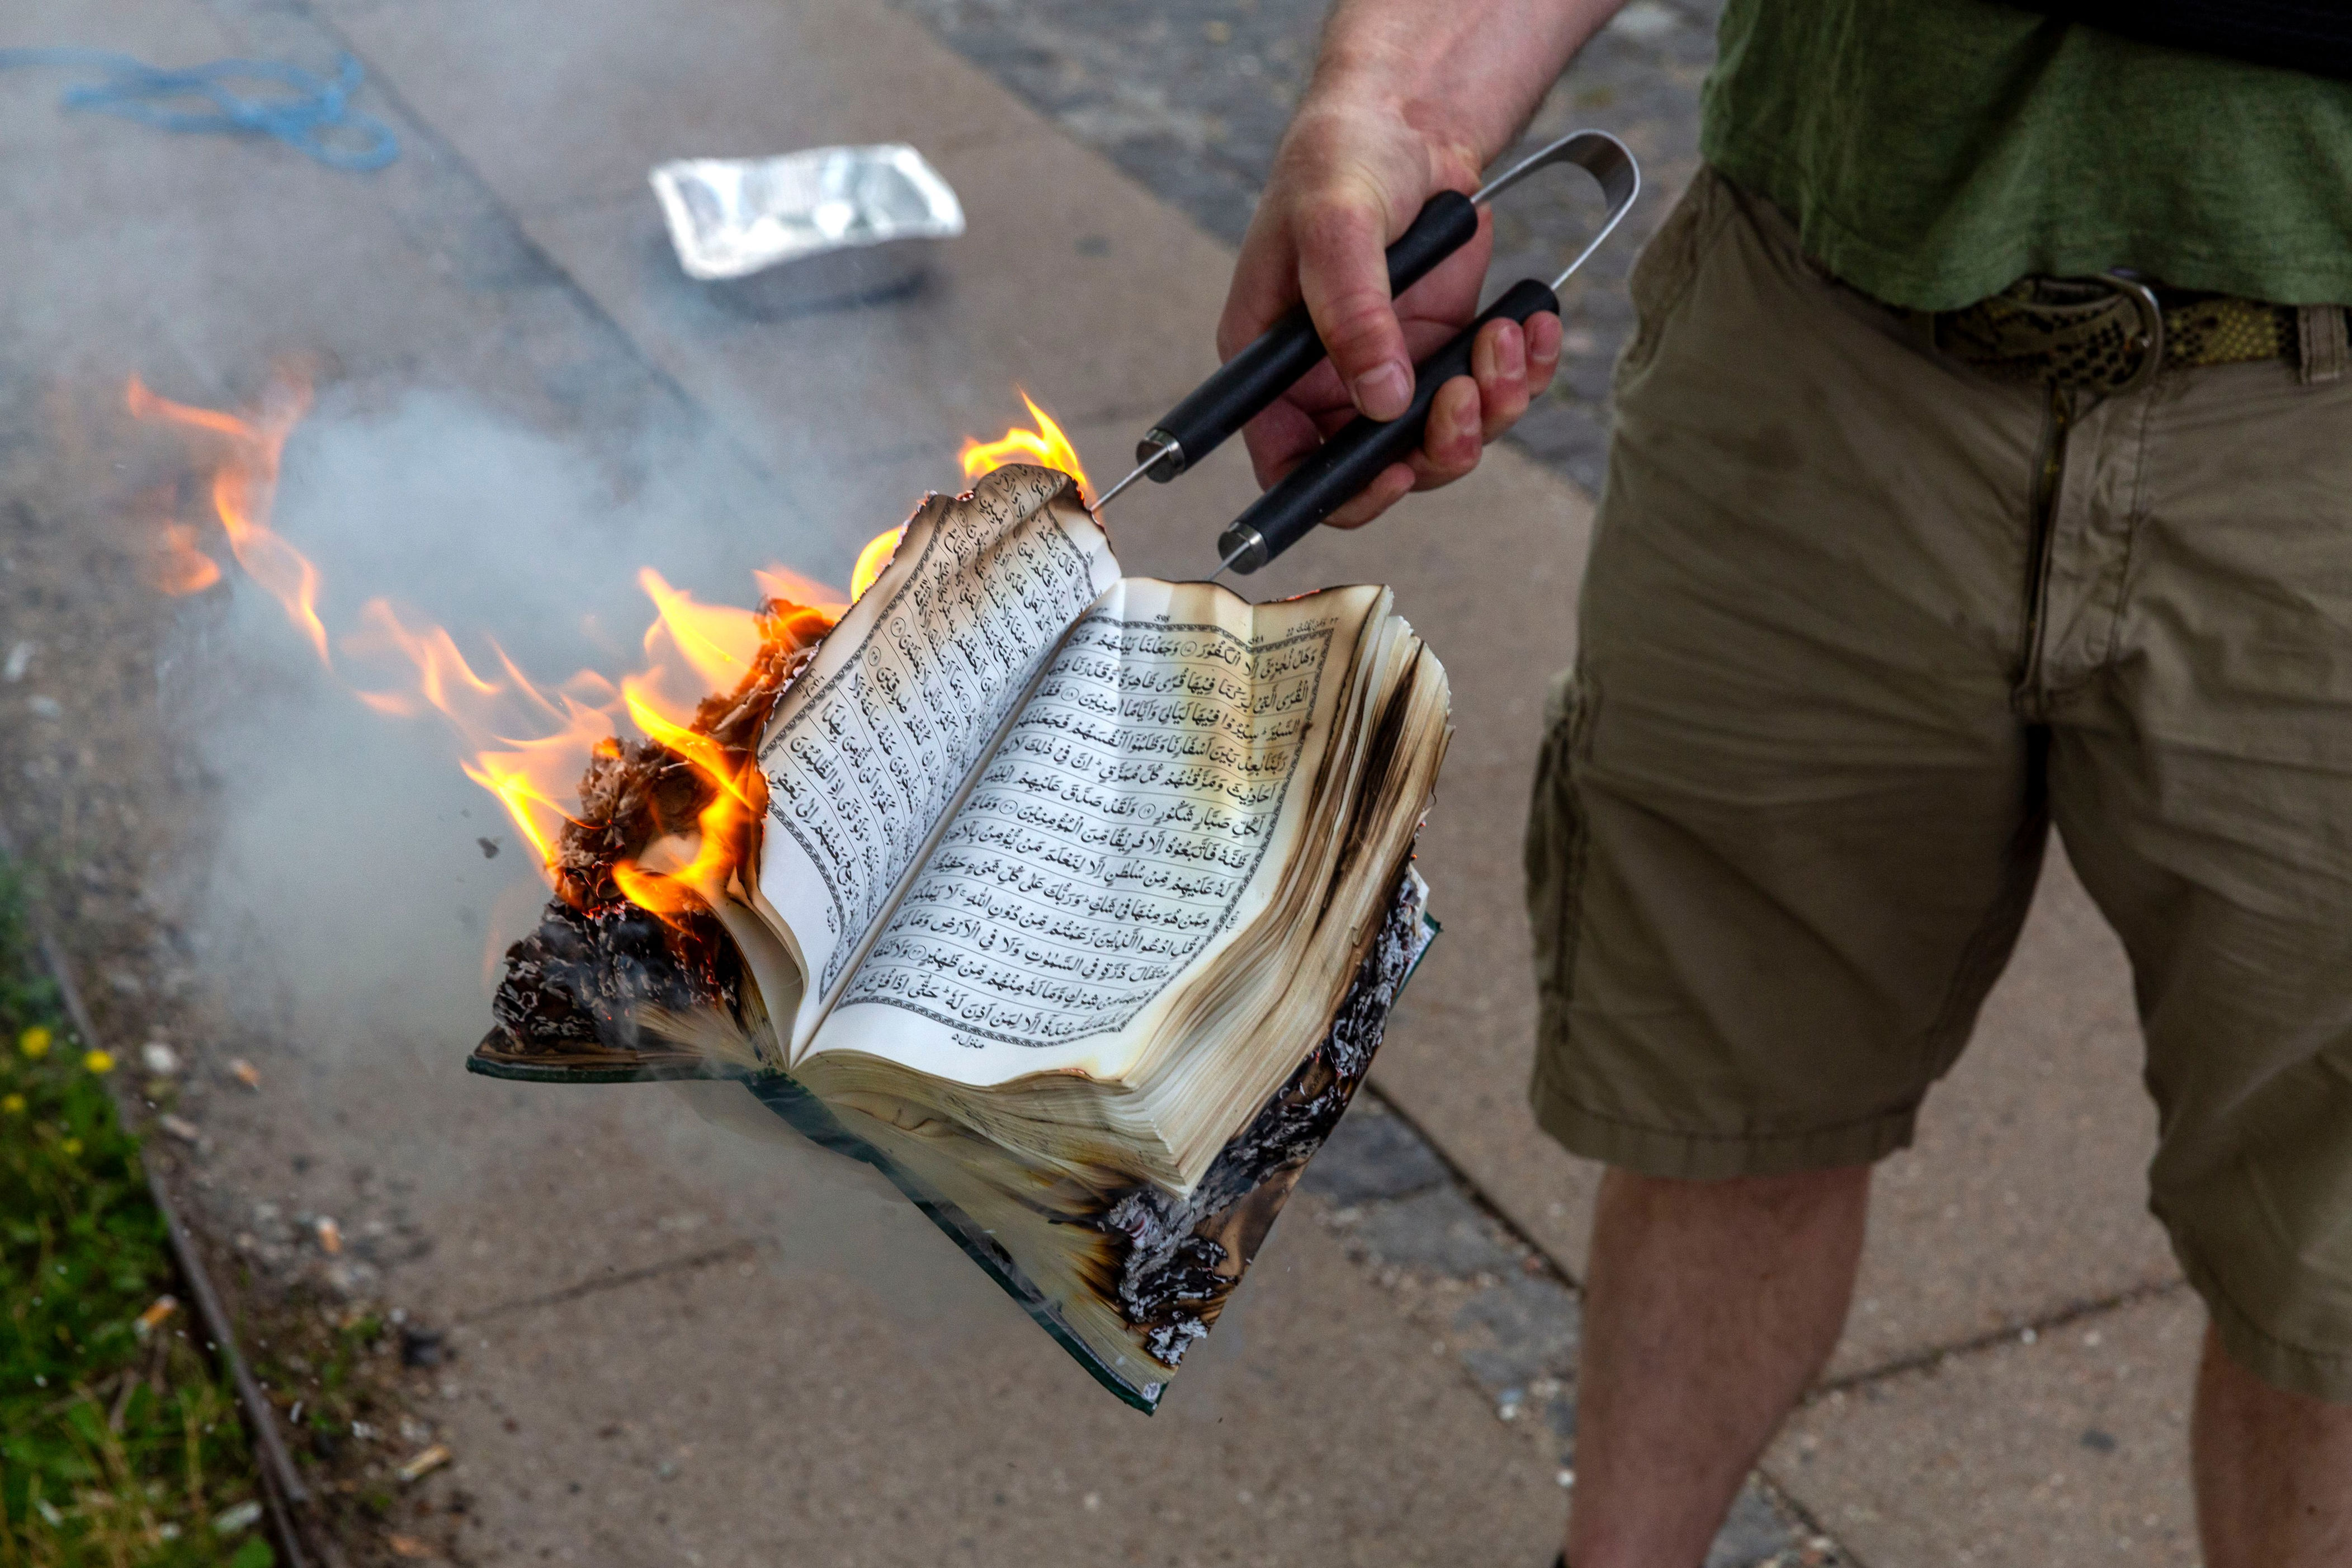 Сожжение Корана в Данииэ. Способы сжигания Корана. Человек который сжег коран